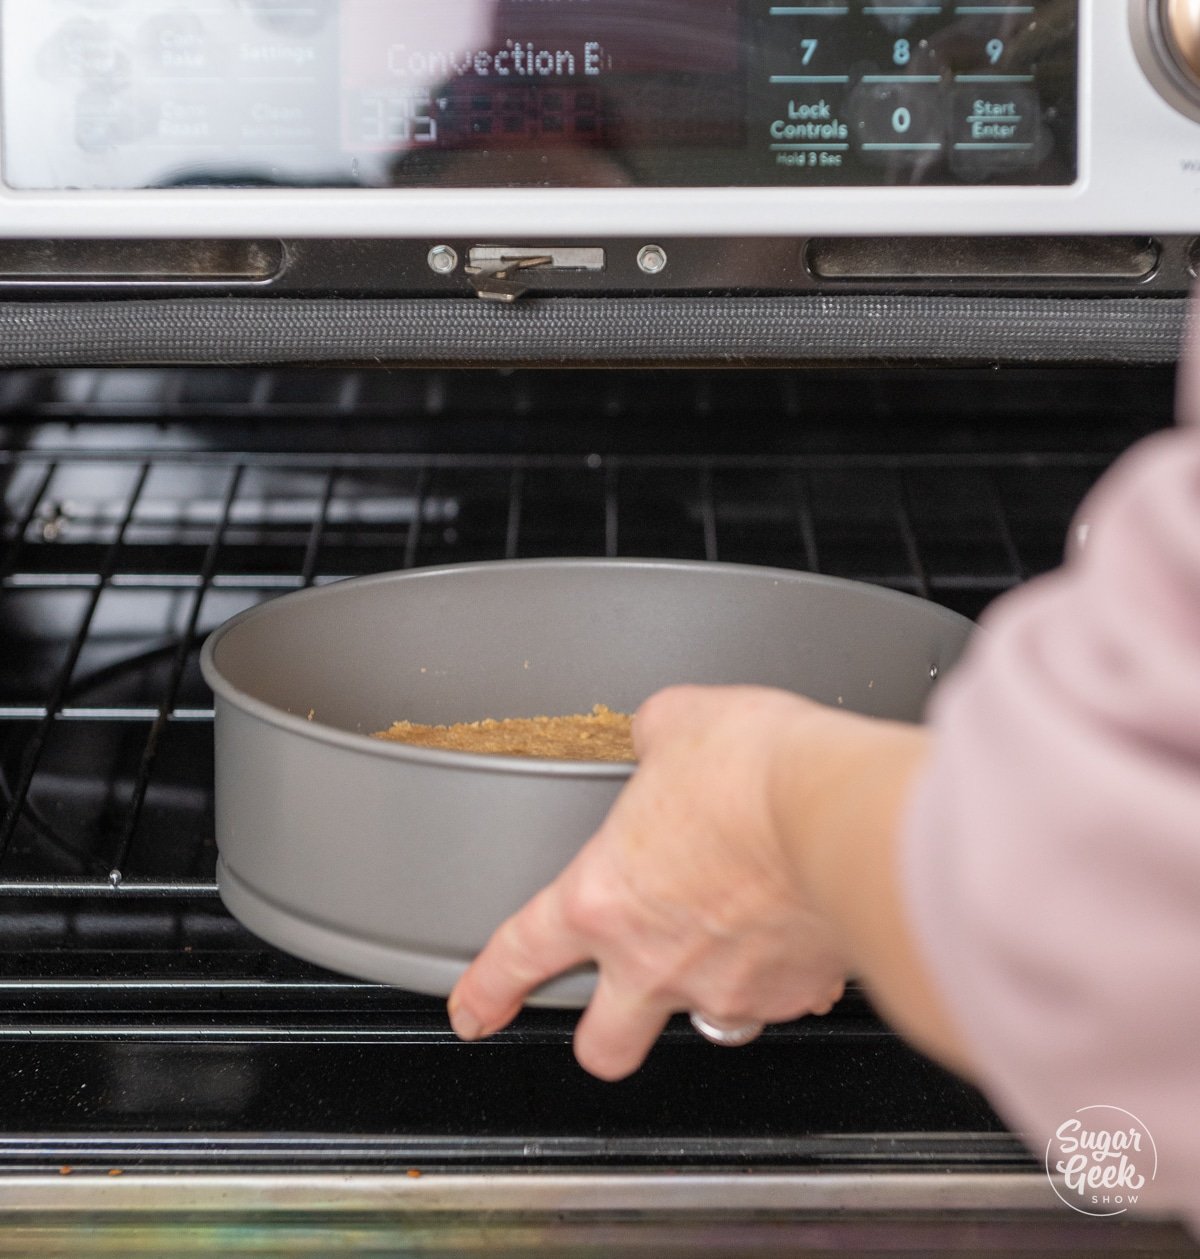 hands placing a springform pan into an oven